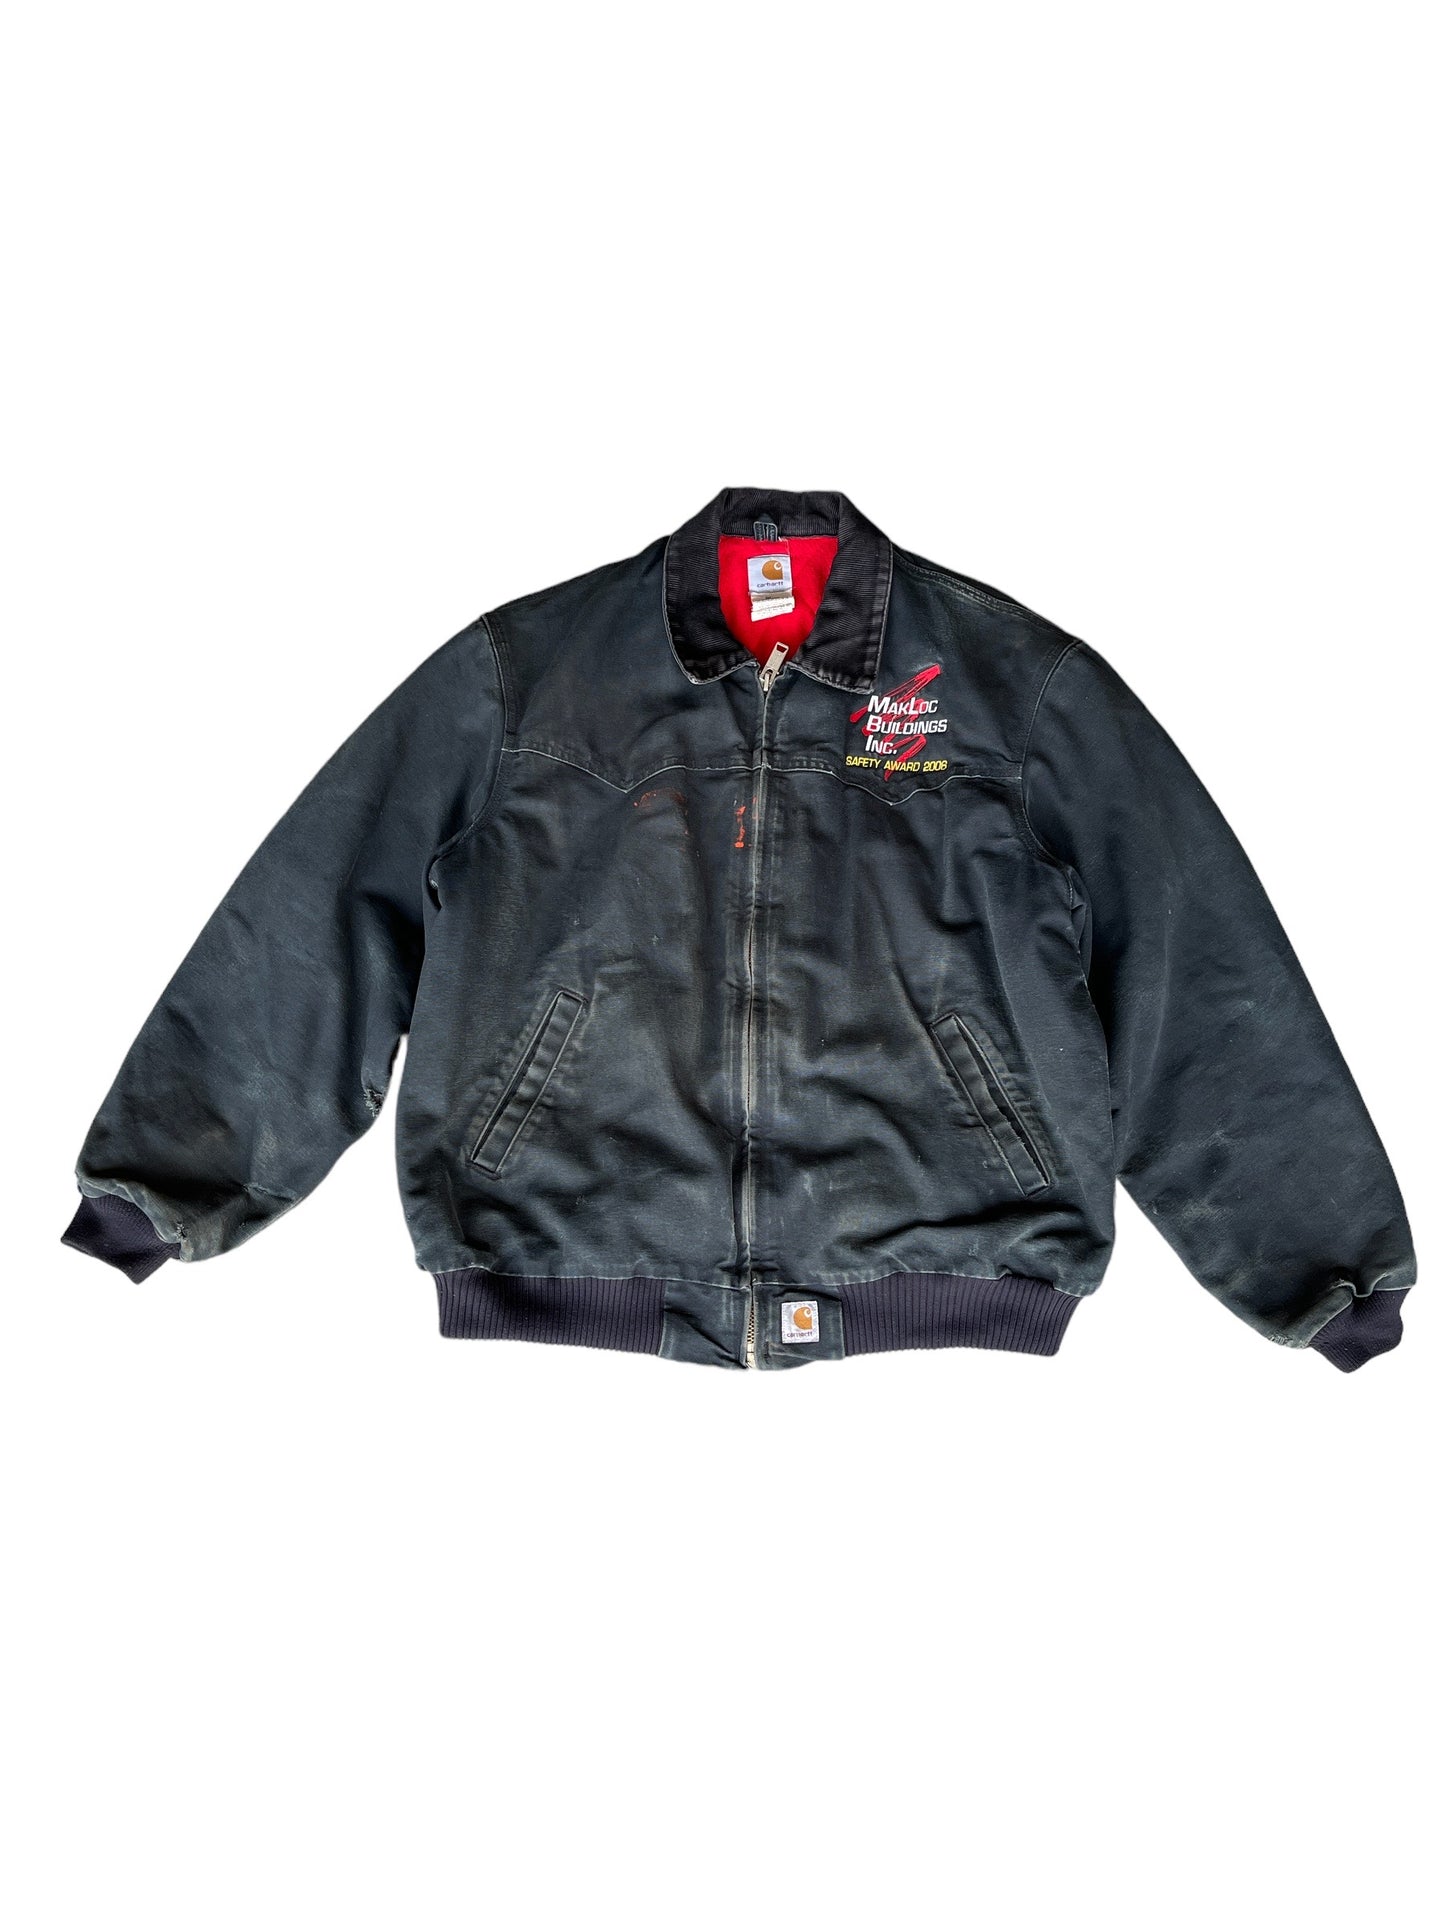 Vintage 90's Carhartt Jacket